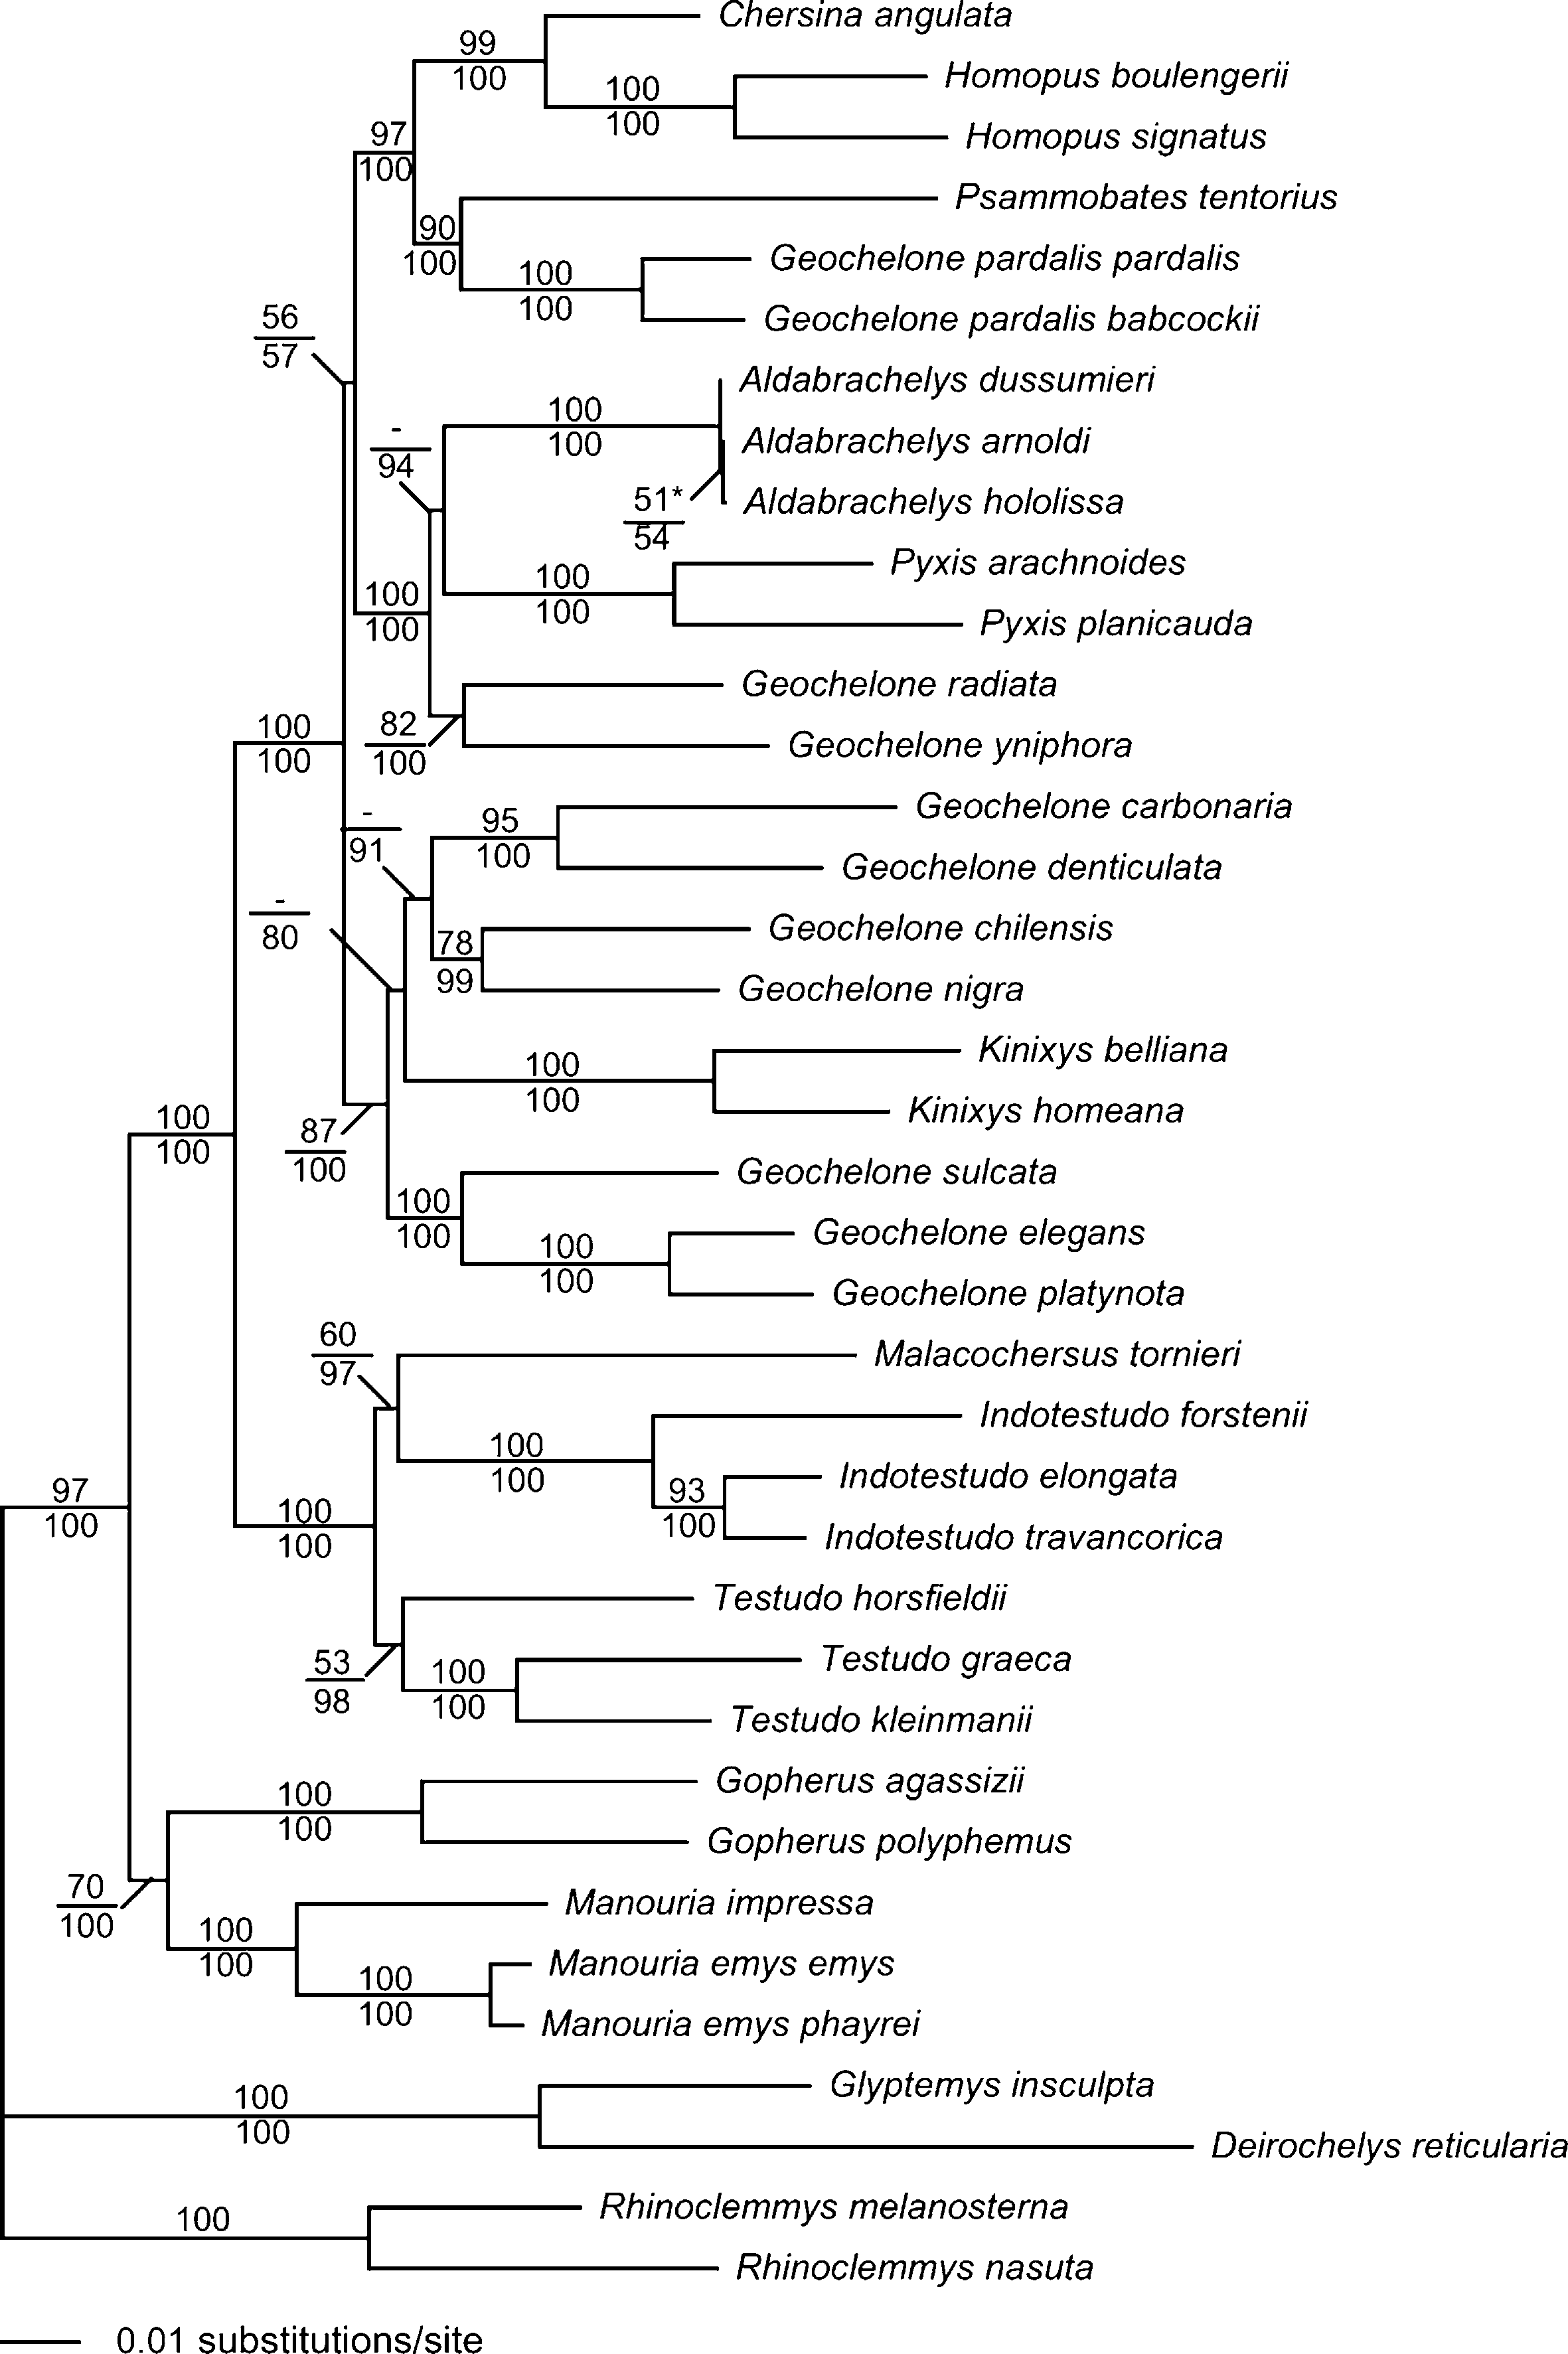 Phylogenetic relationship within Testudinidae